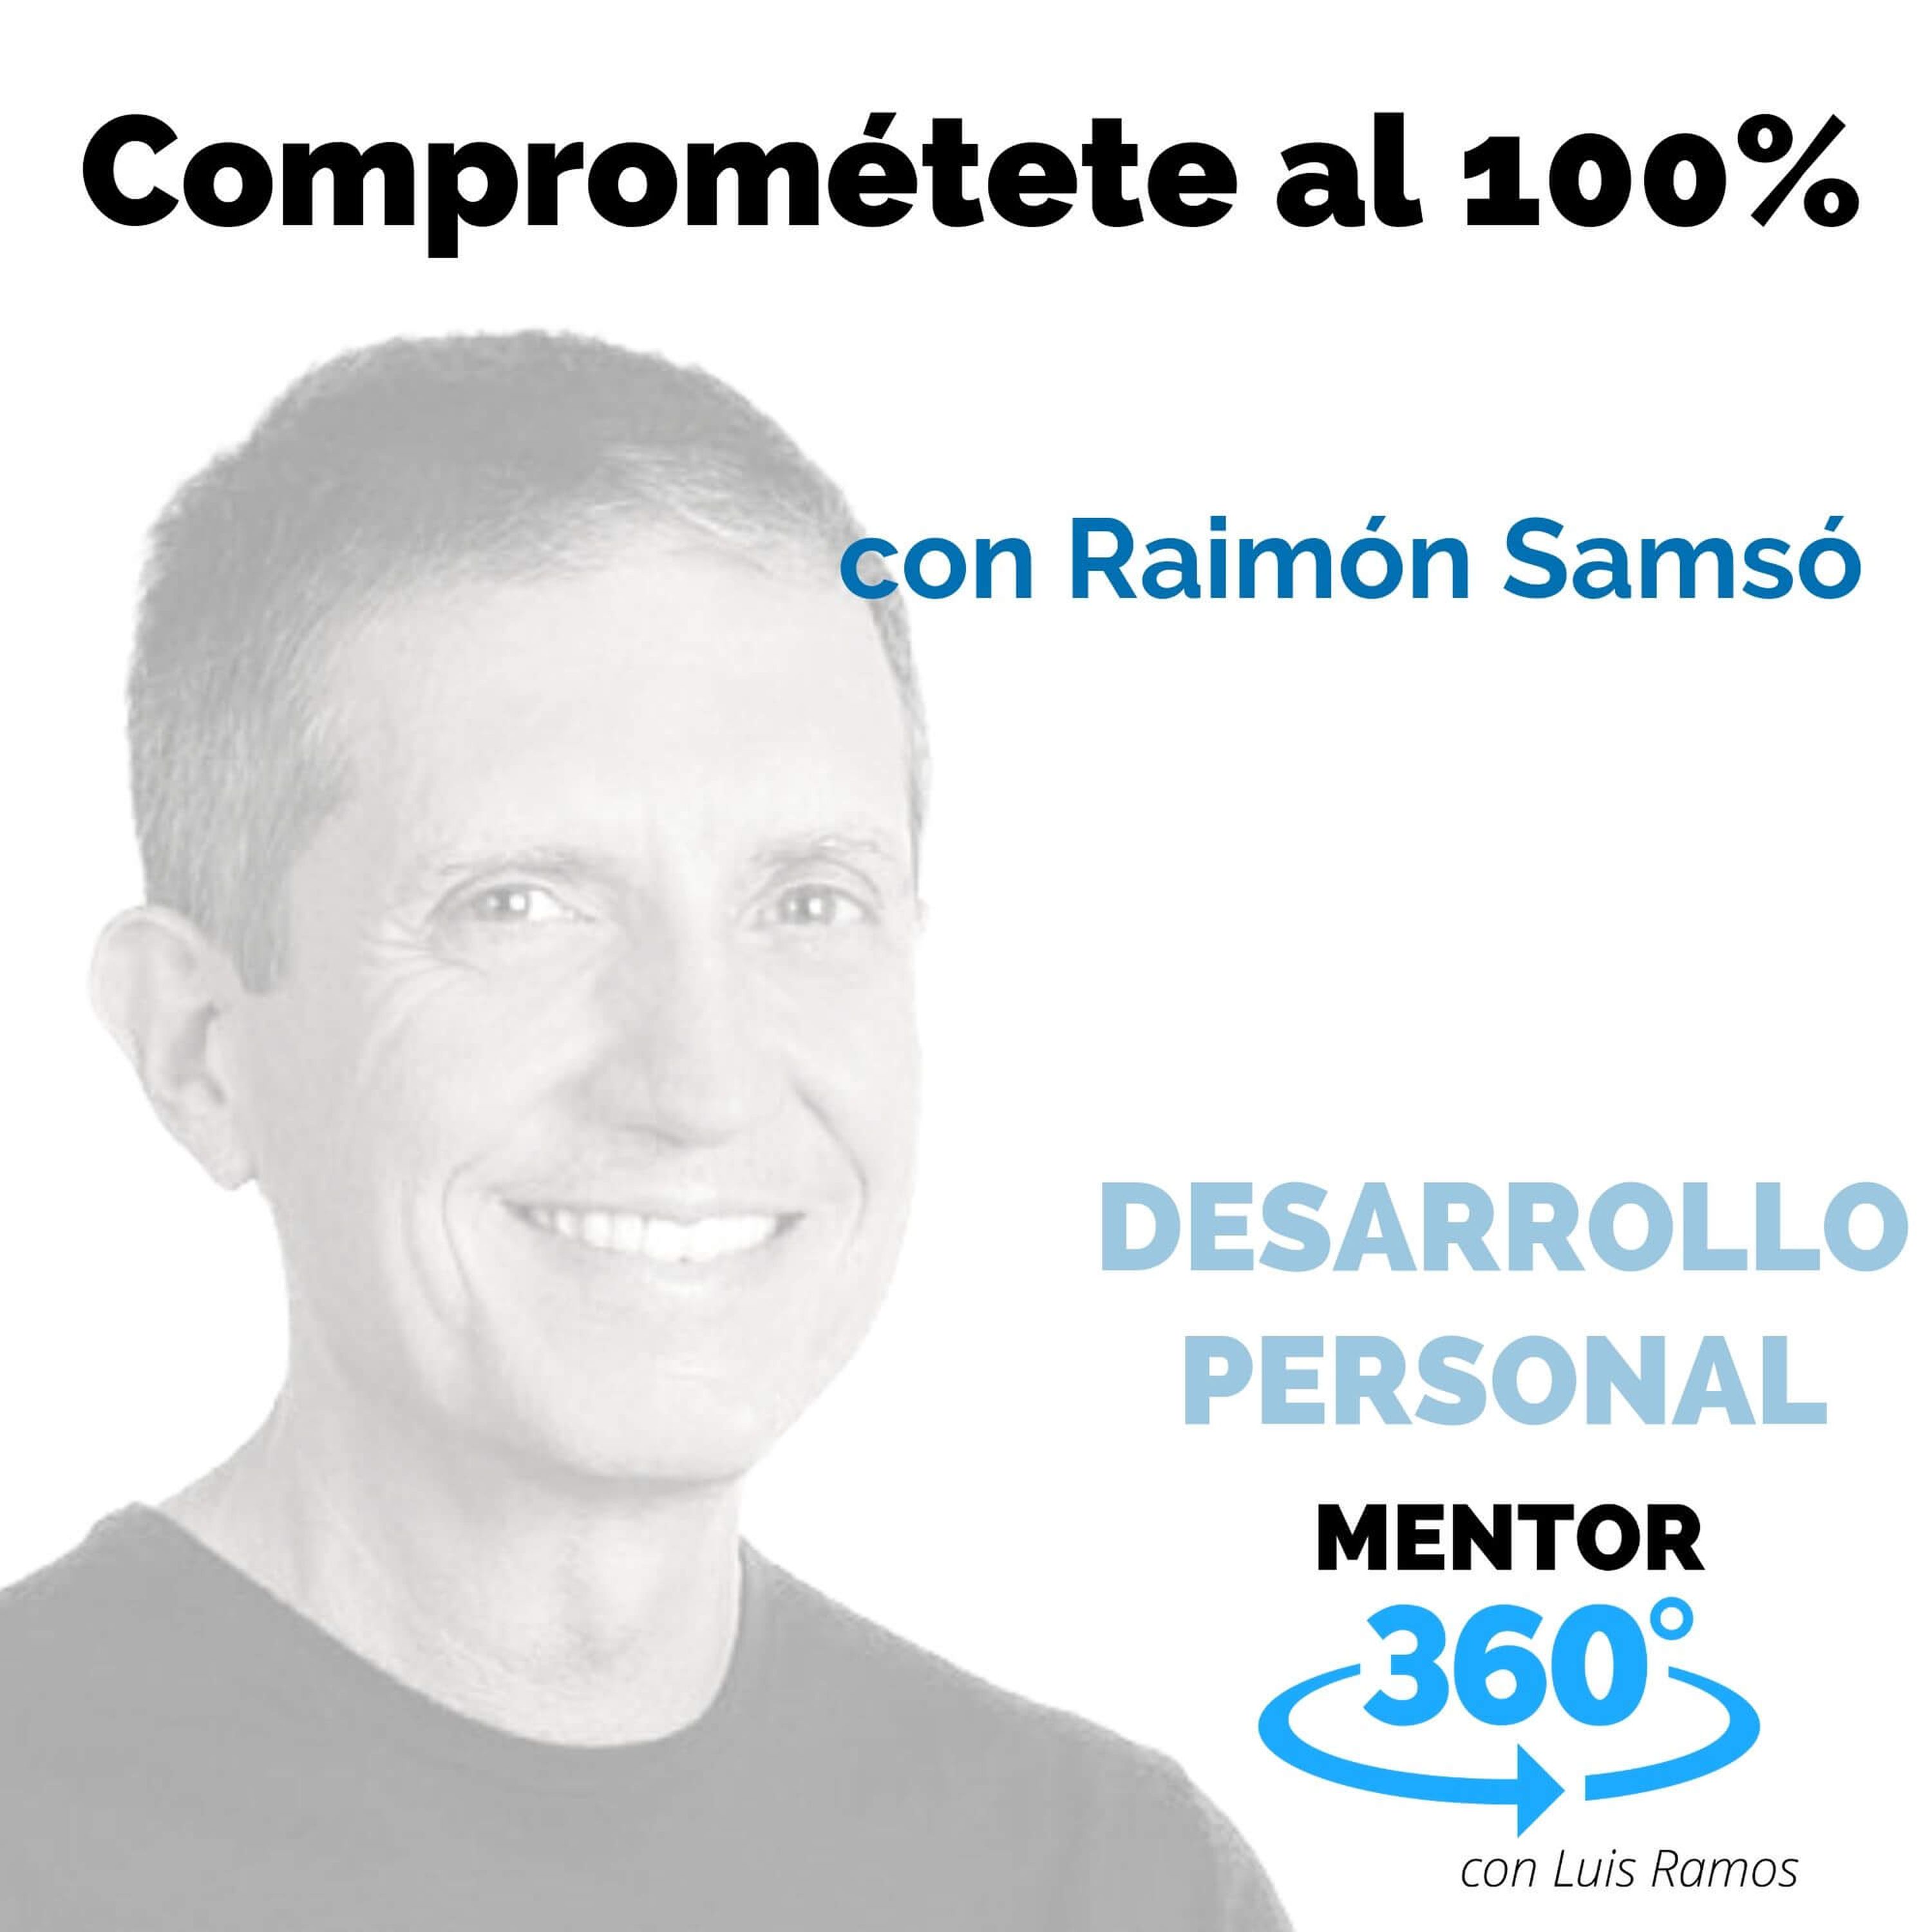 Comprométete al 100%, con Raimón Samsó - DESARROLLO PERSONAL - MENTOR360